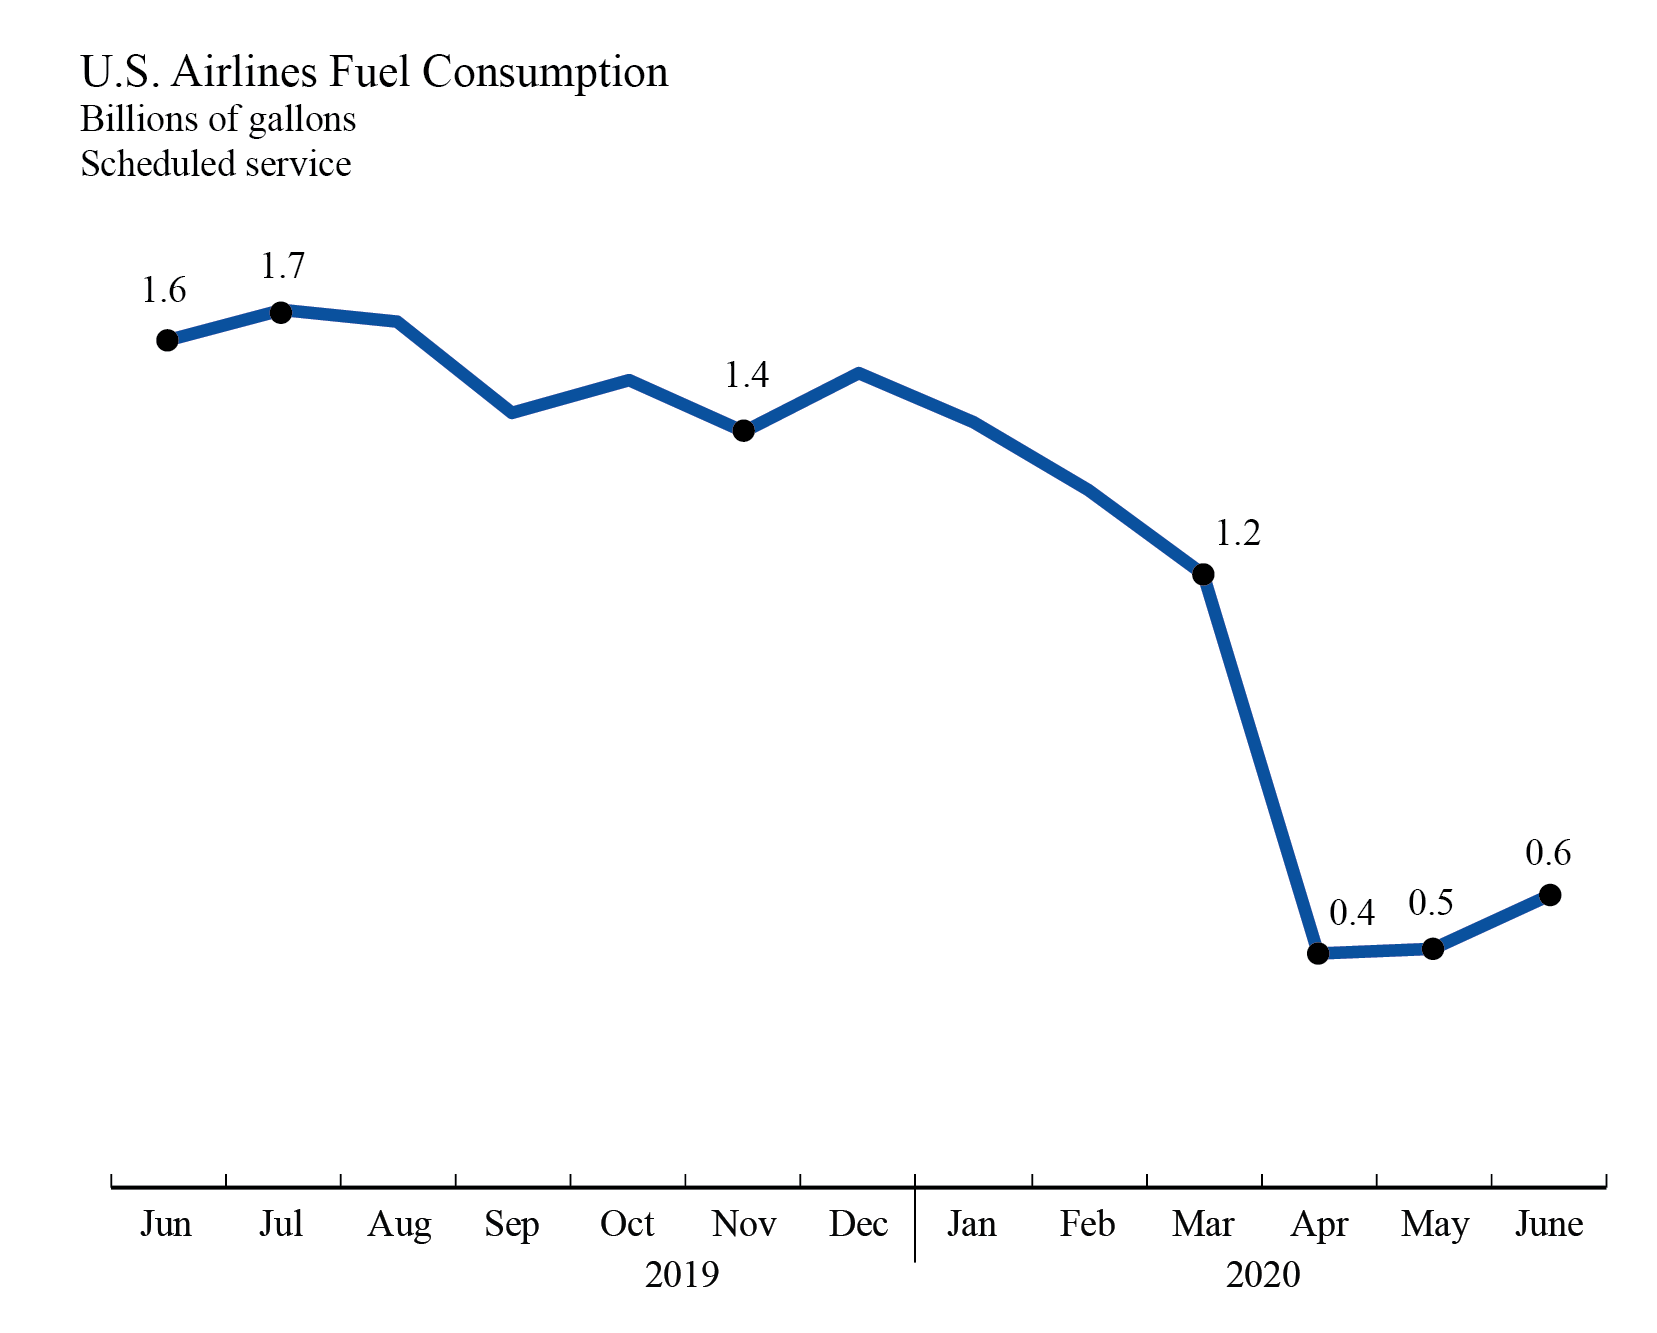 US Airlines Fuel Consumption June 2020